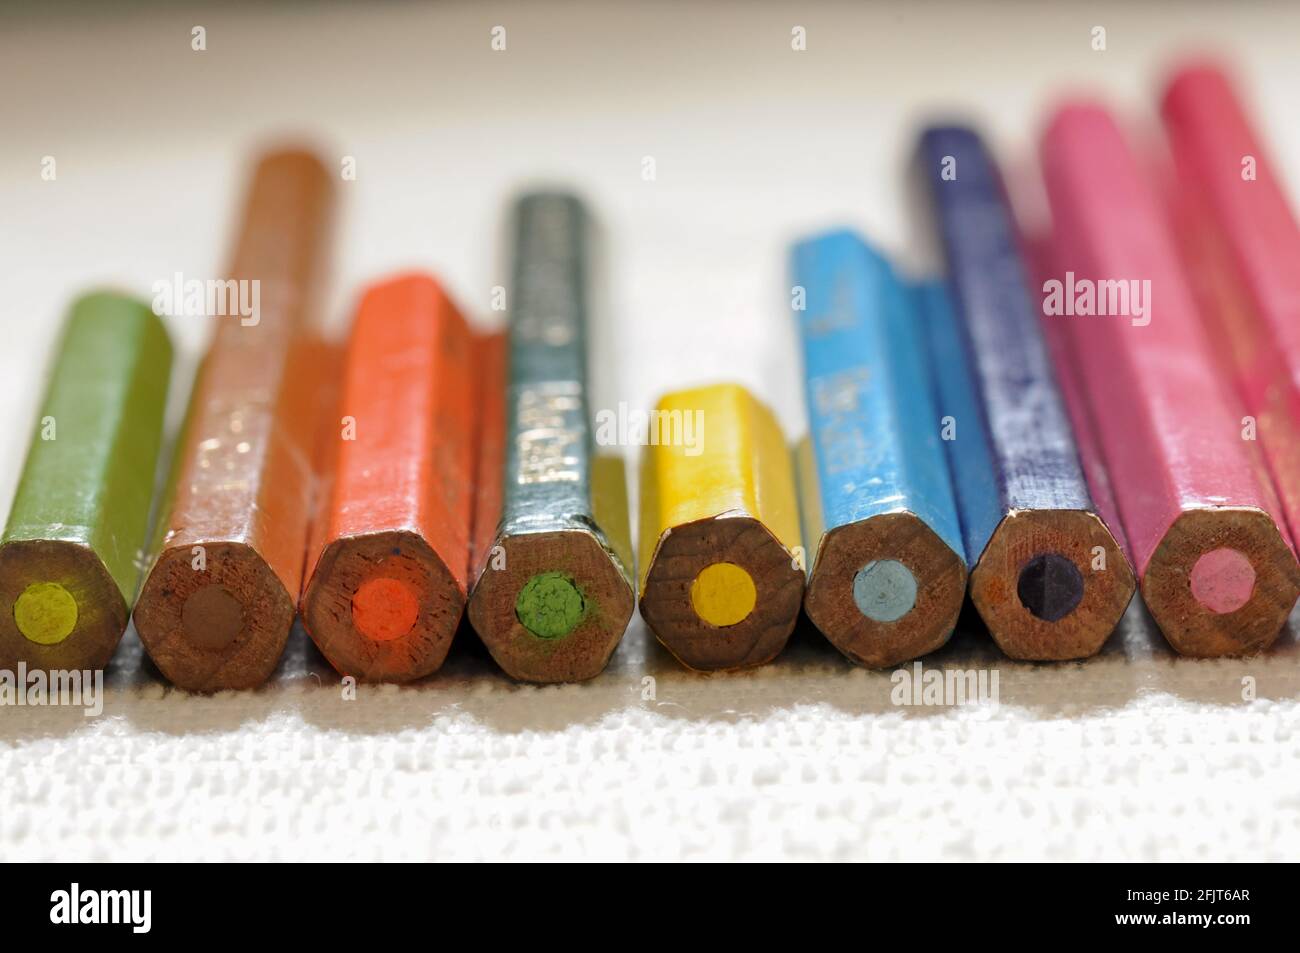 https://c8.alamy.com/comp/2FJT6AR/colorful-and-funny-arrangement-of-a-set-of-pencils-and-ink-pots-2FJT6AR.jpg